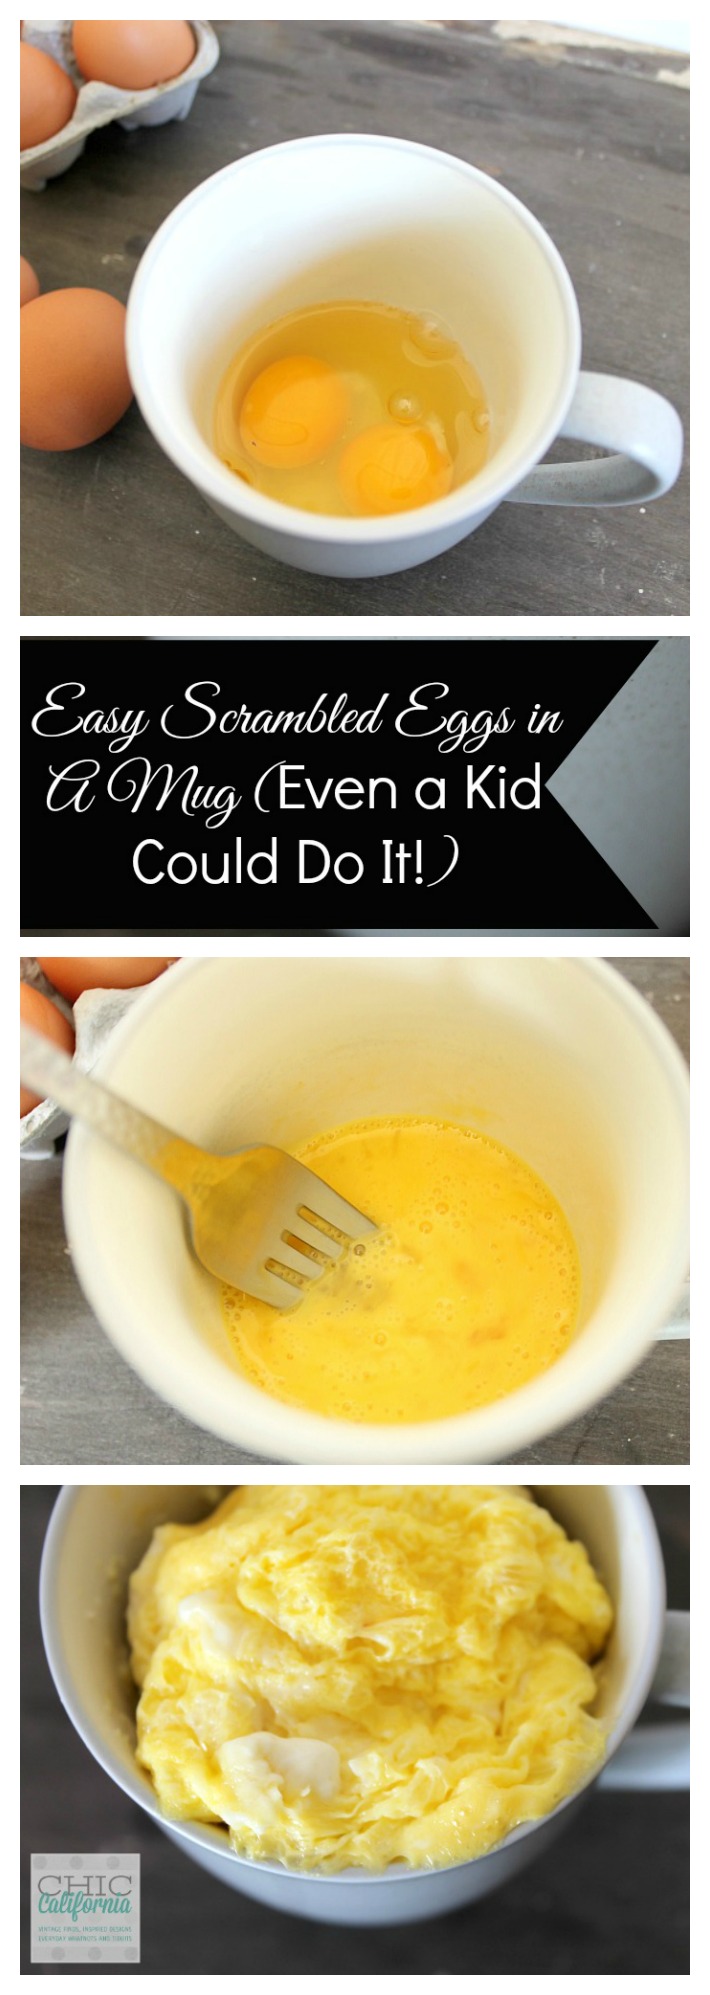 Easy Scrambled Eggs in a Mug